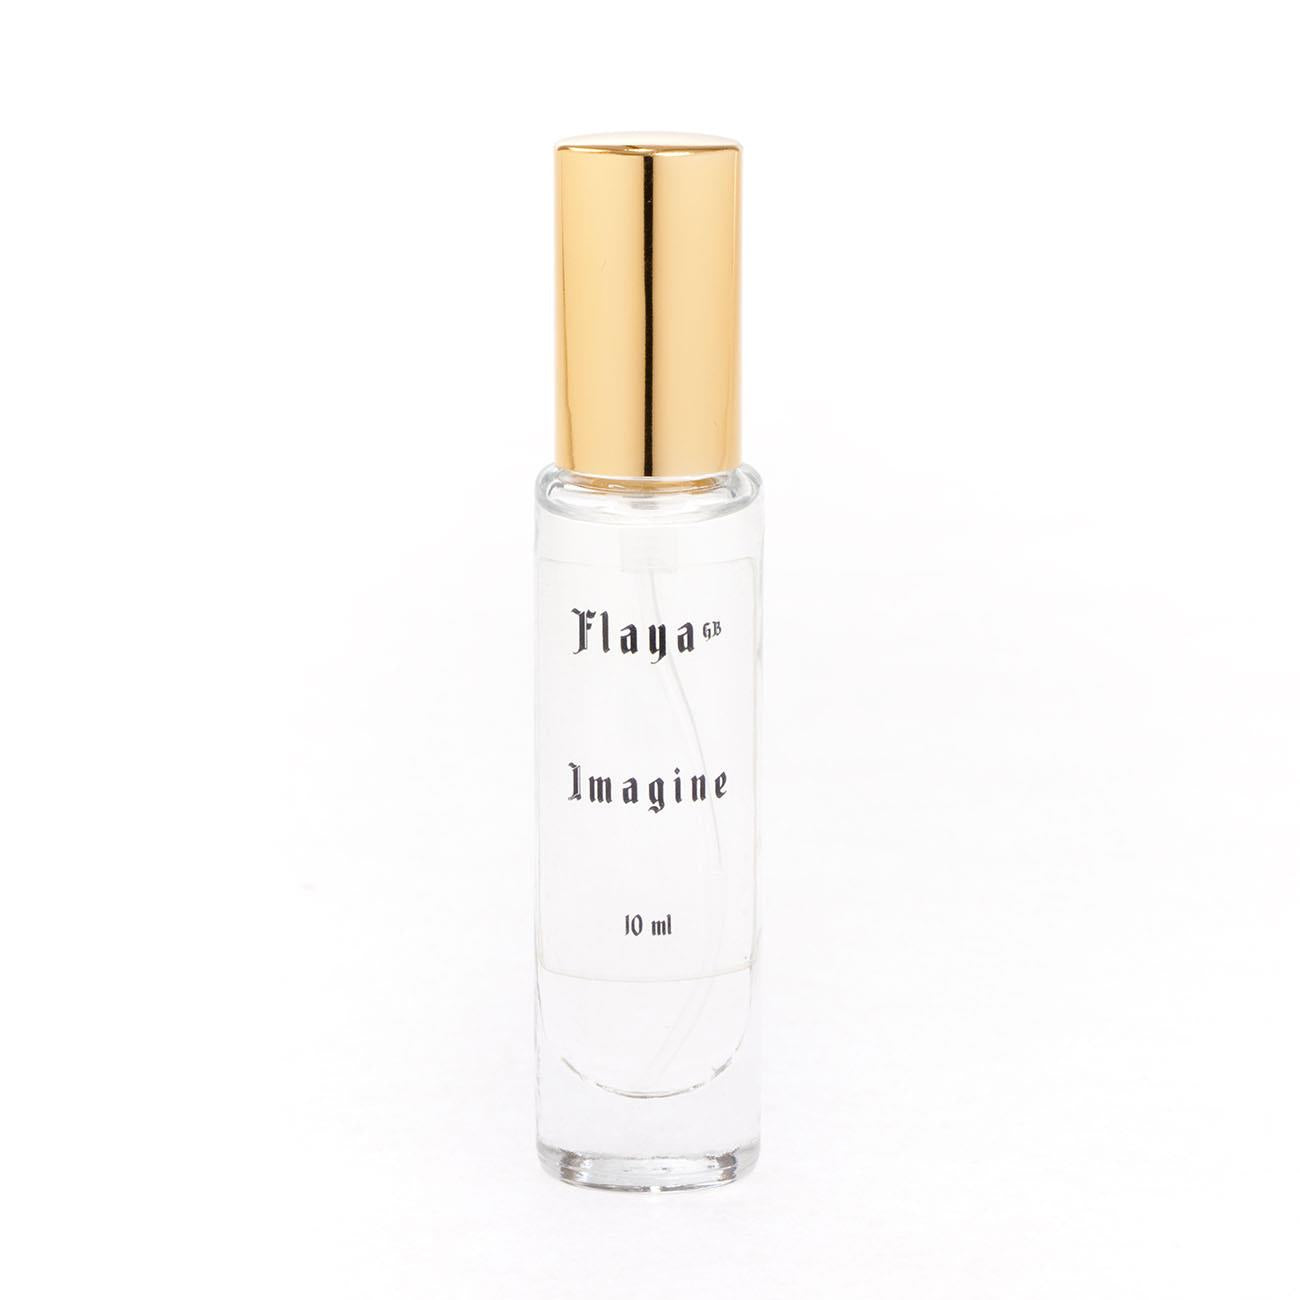 Imagine Perfume 10ml